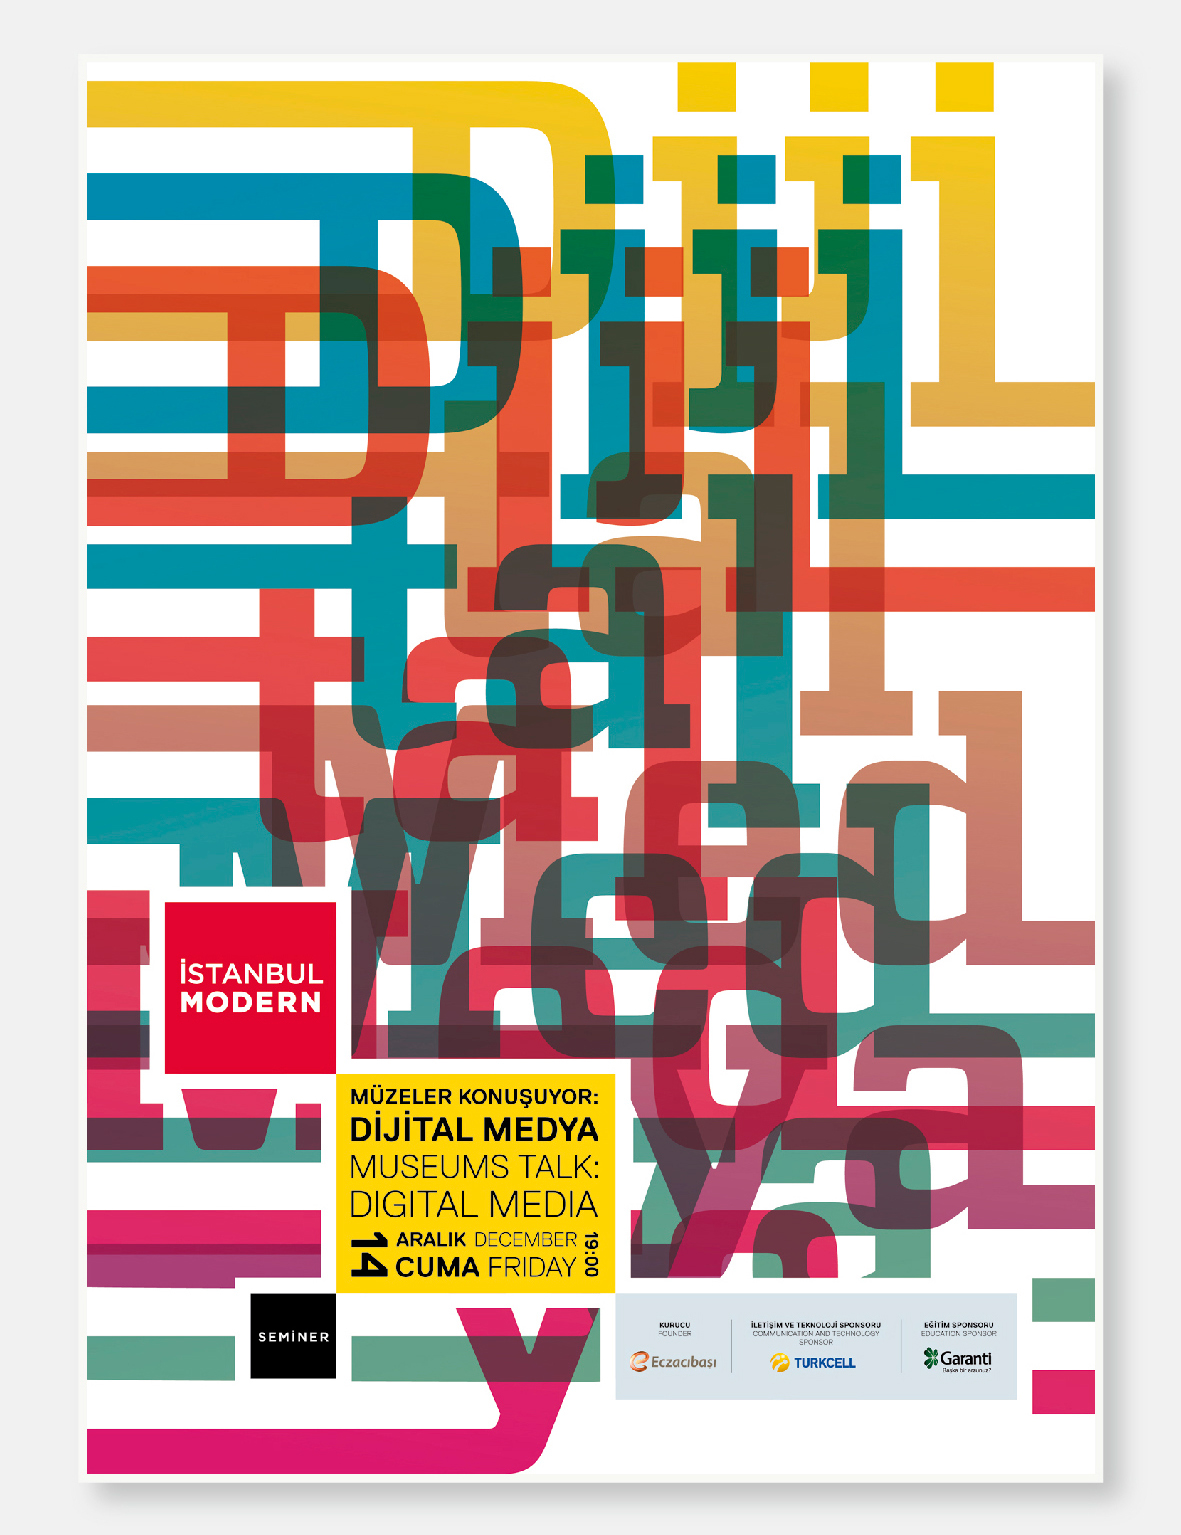 istanbul modern museum poster emre Ozbek power Young Program digital media